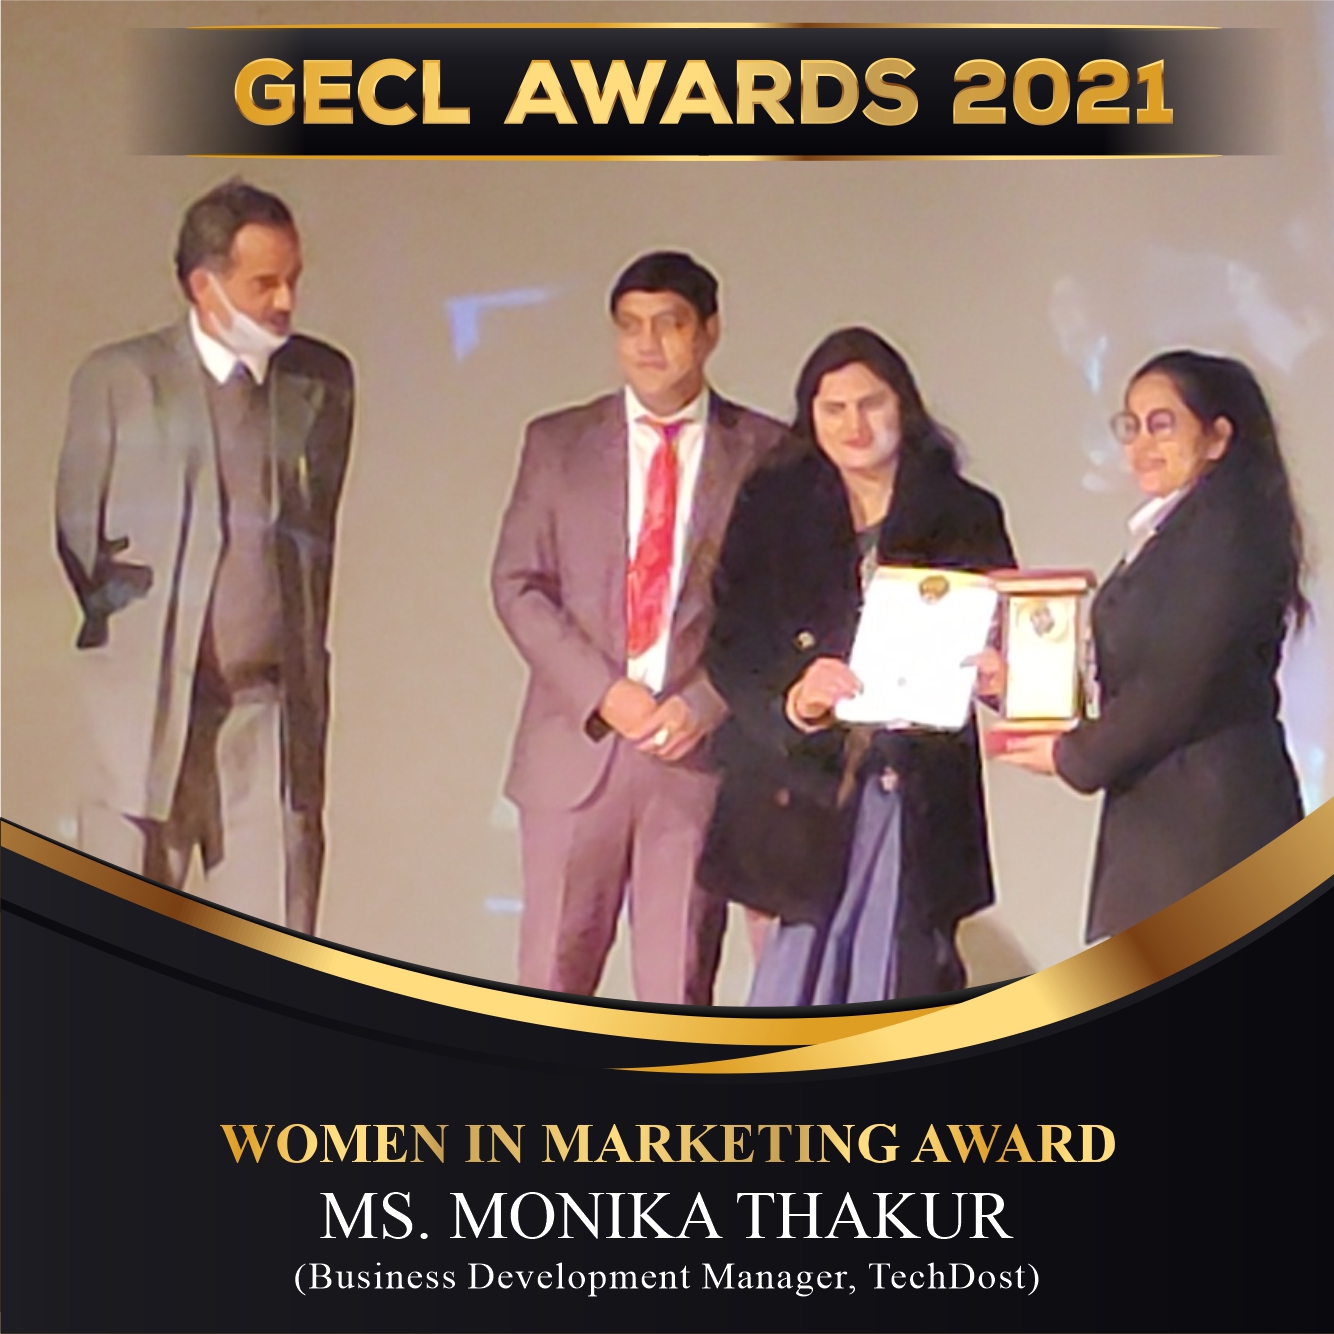 Women in Marketing Award - Monika Thakur